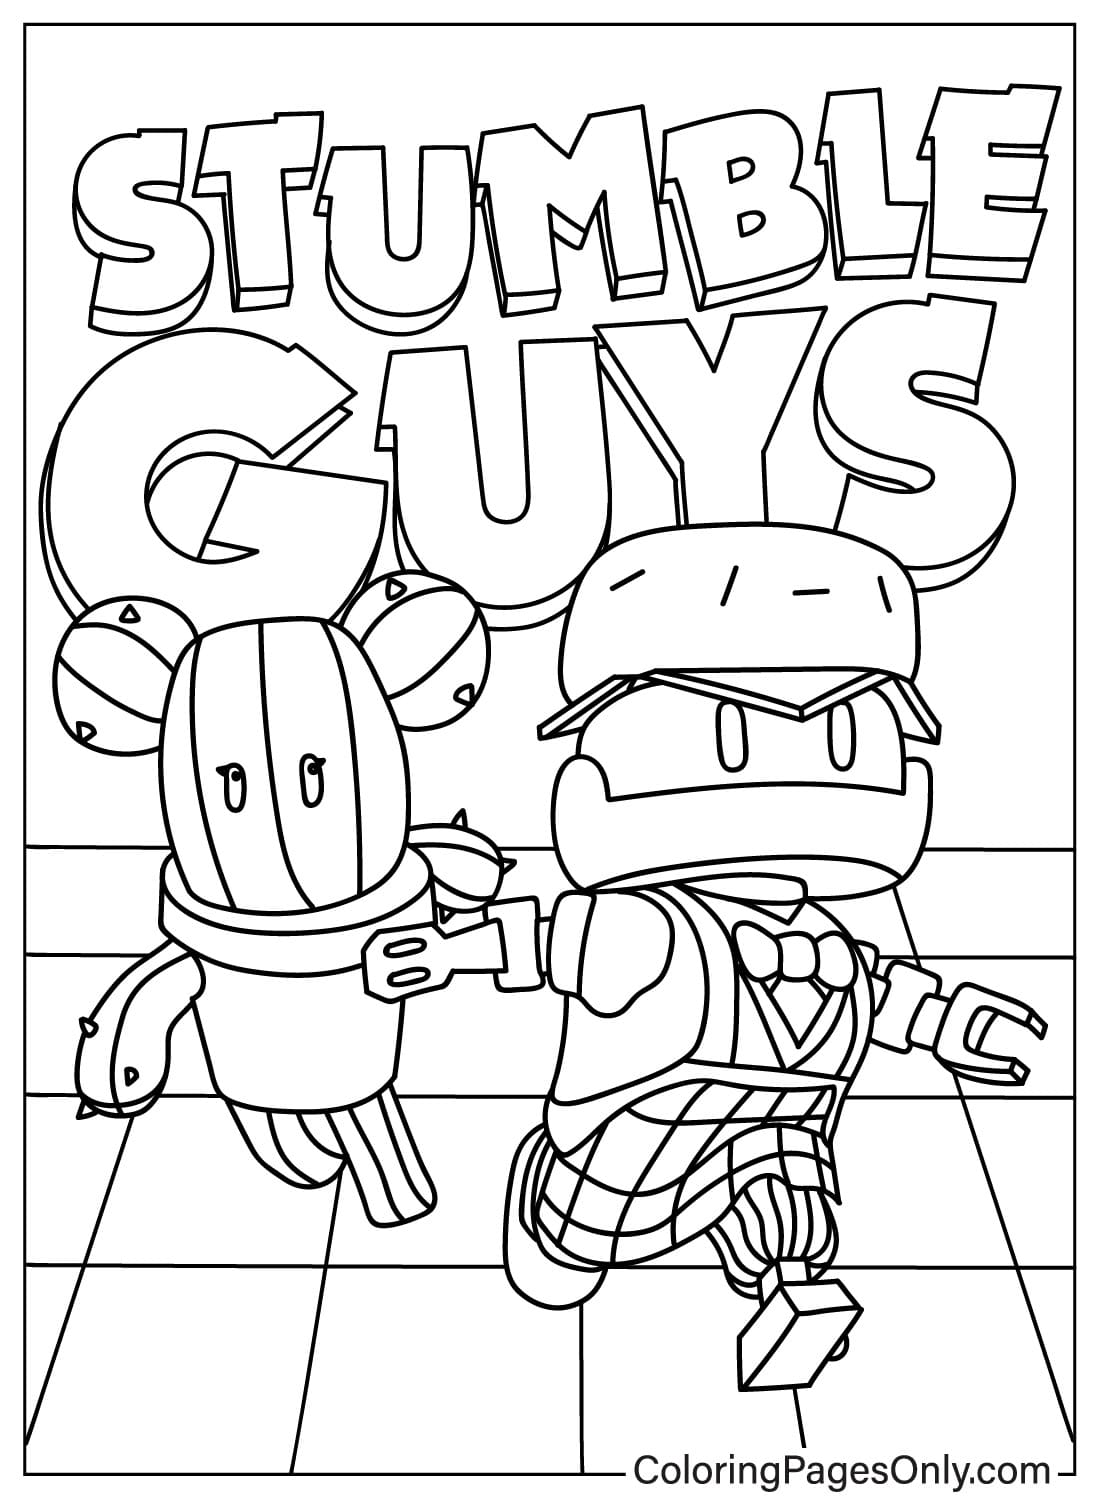 Página para colorir de imagens de Stumble Guys de Stumble Guys